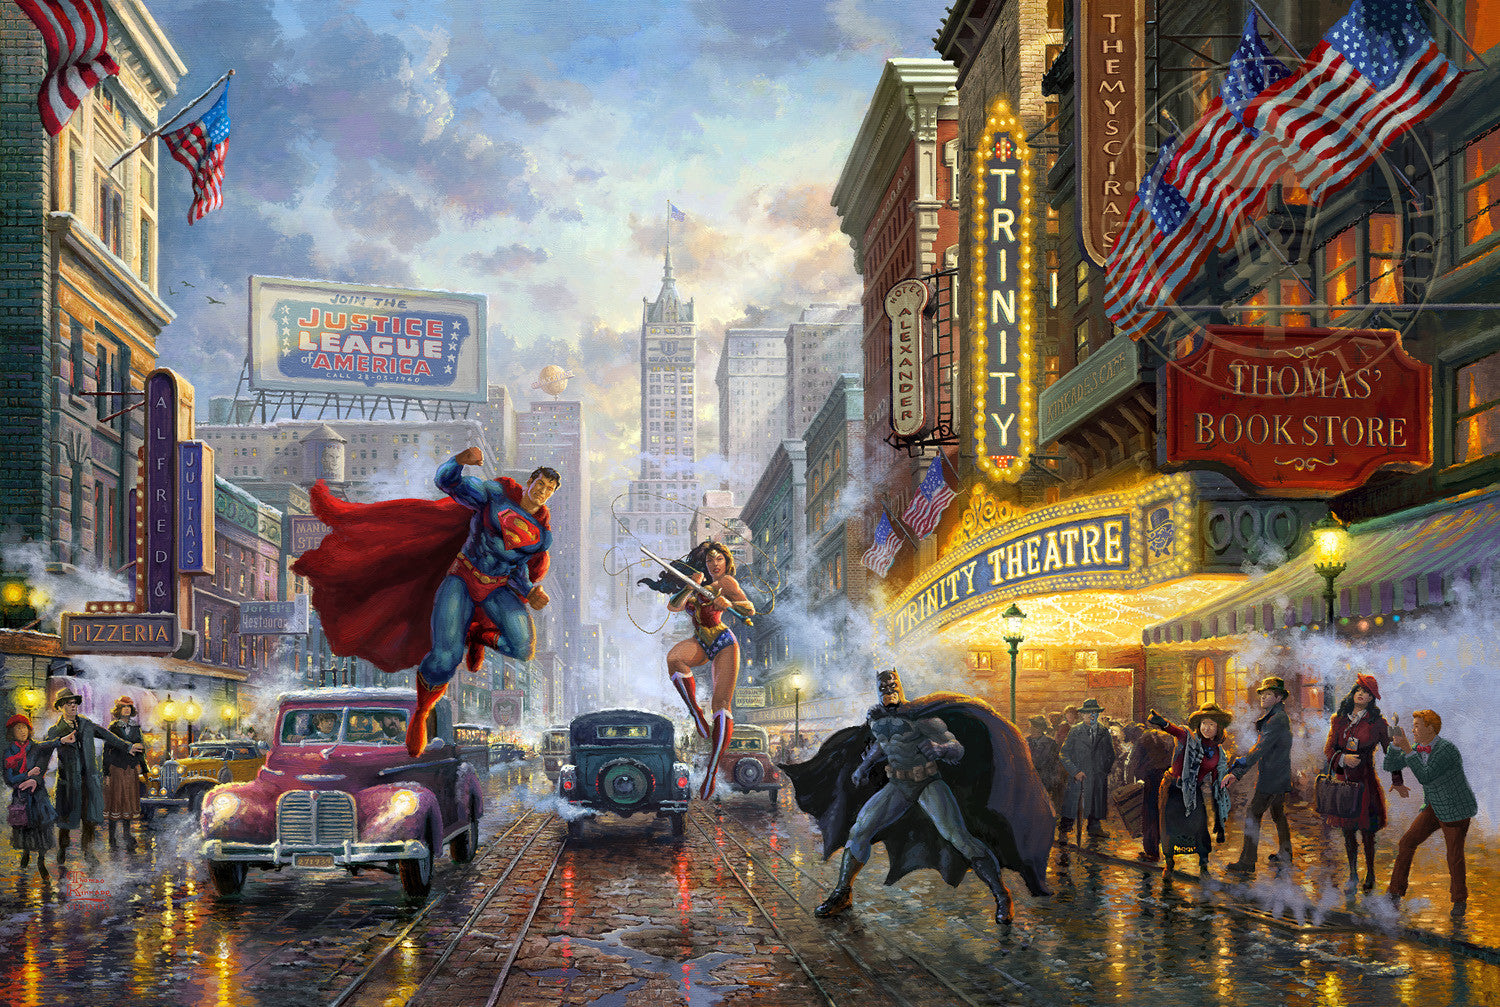 Thomas Kinkade Studios "Batman, Superman & Wonder Woman" Limited Edition Giclee